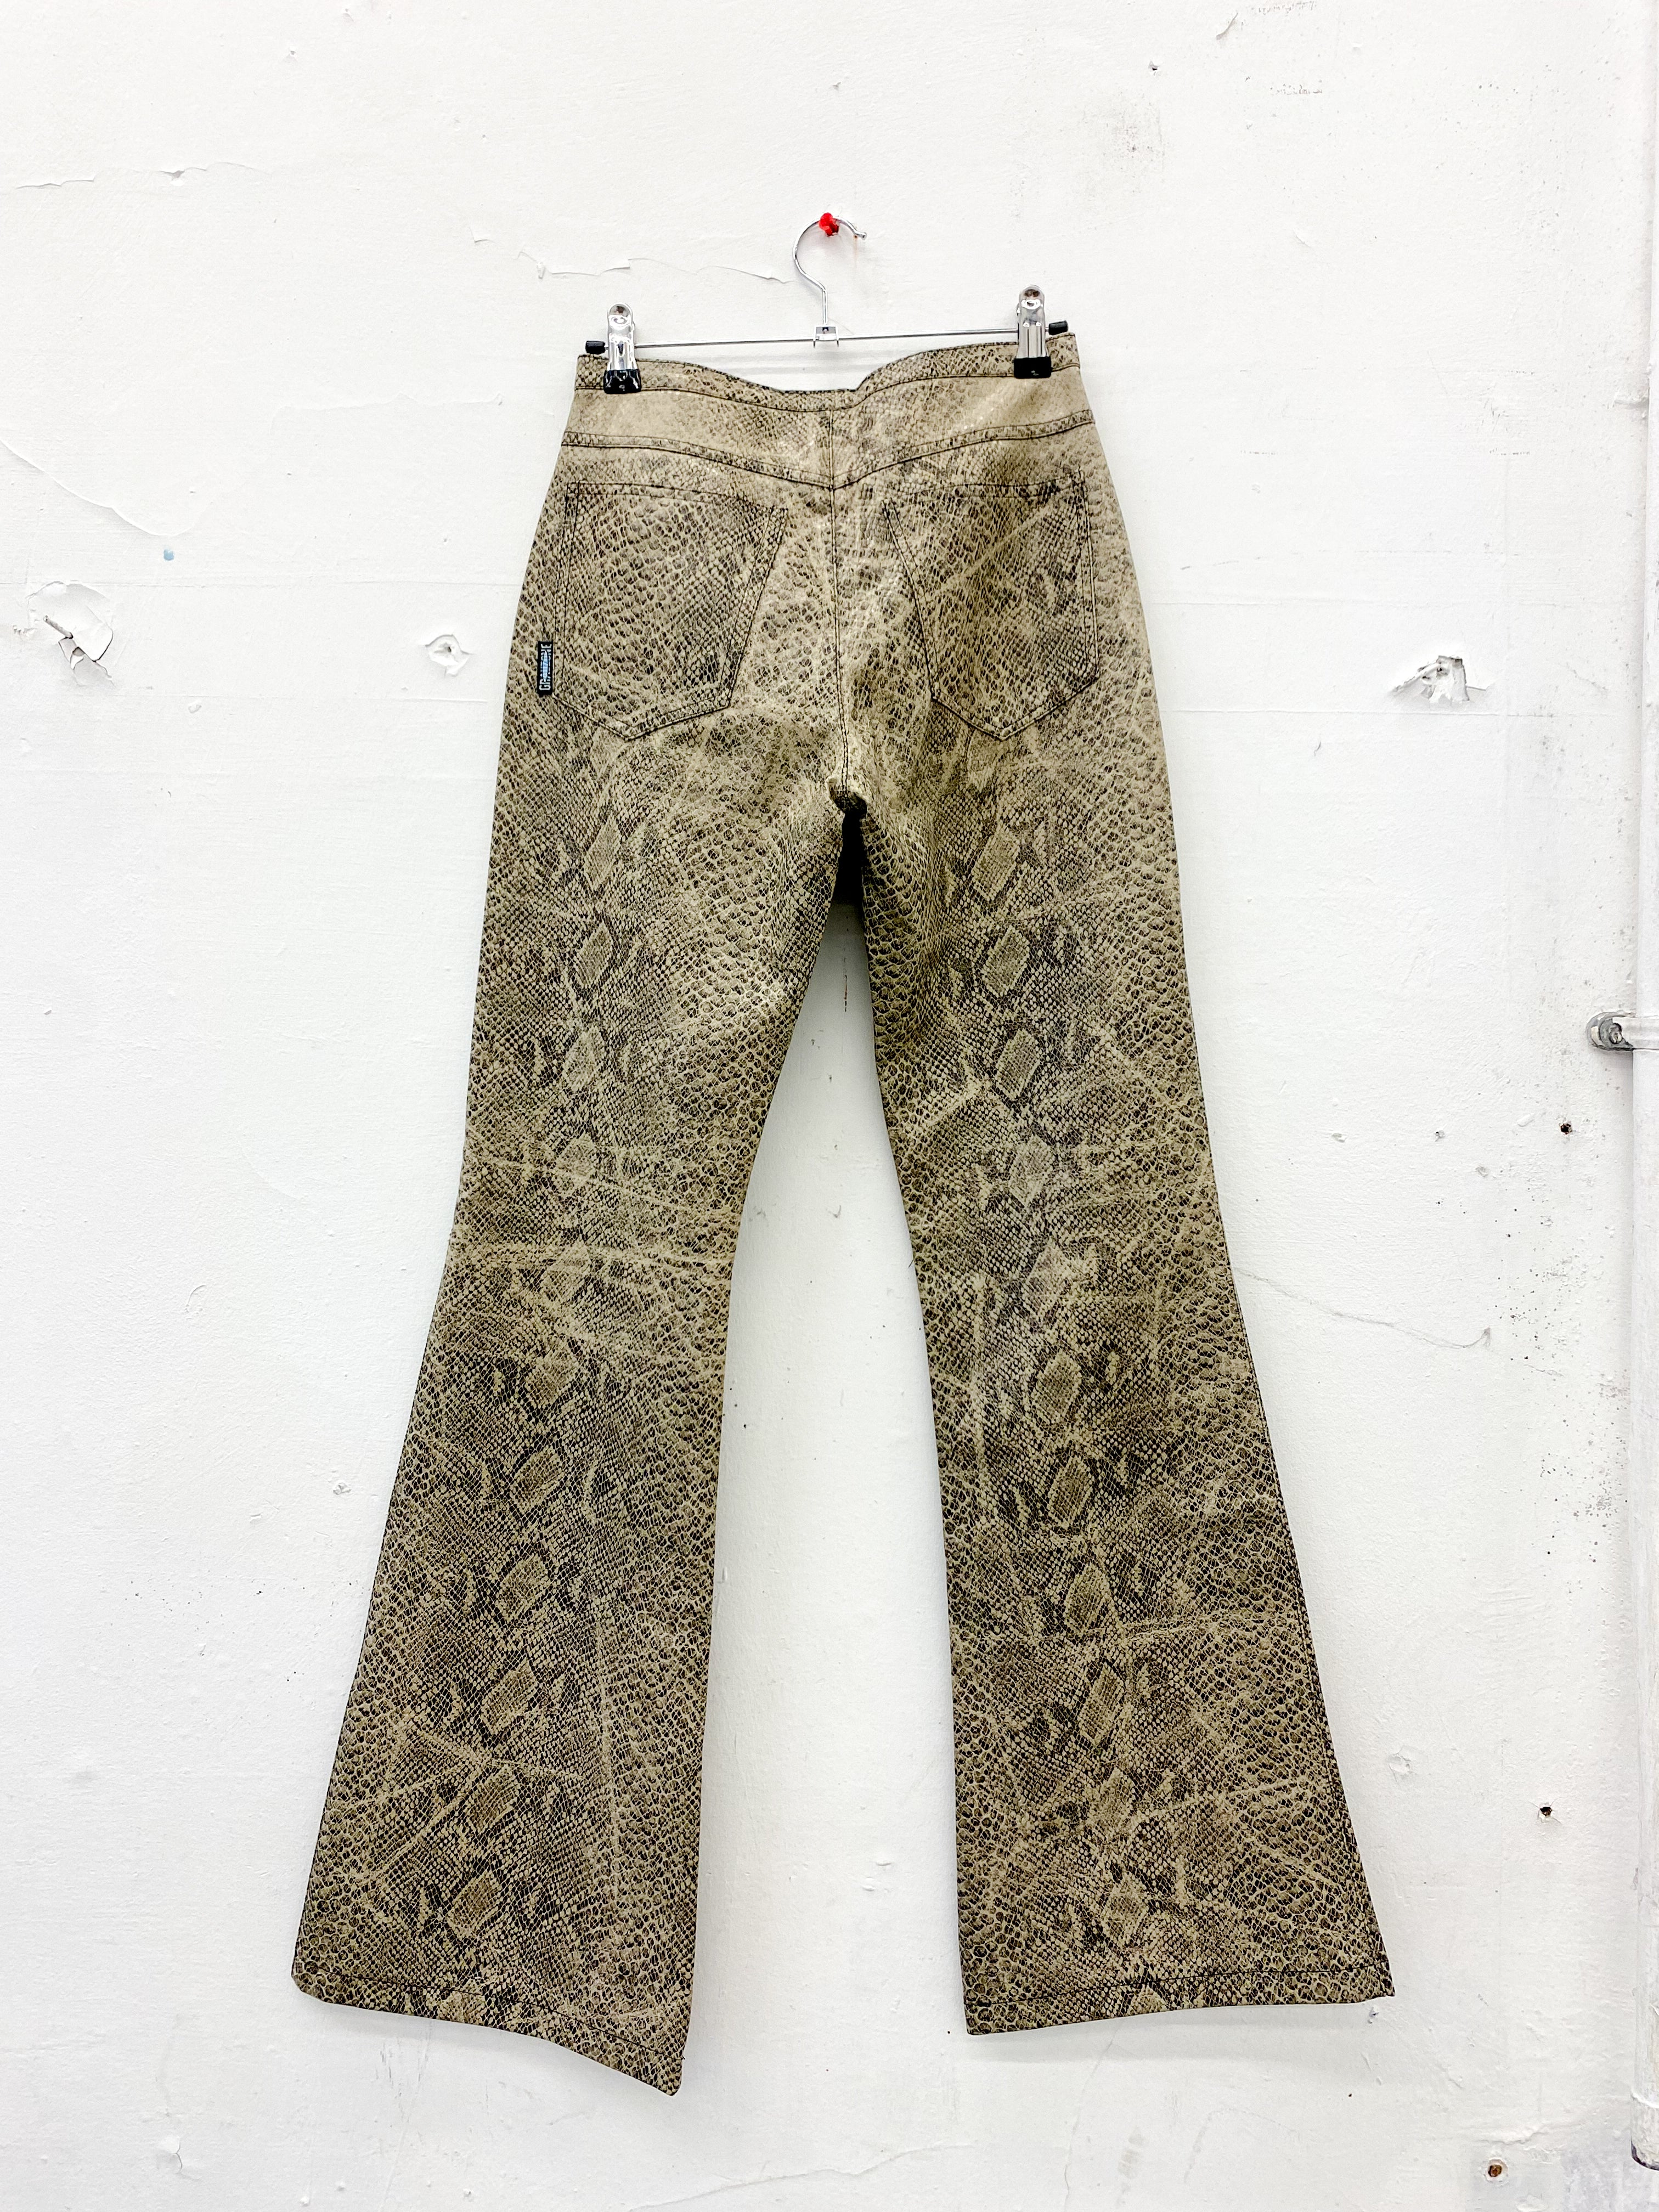 Snakeskin Leatherette Pants 26"W | 31"L